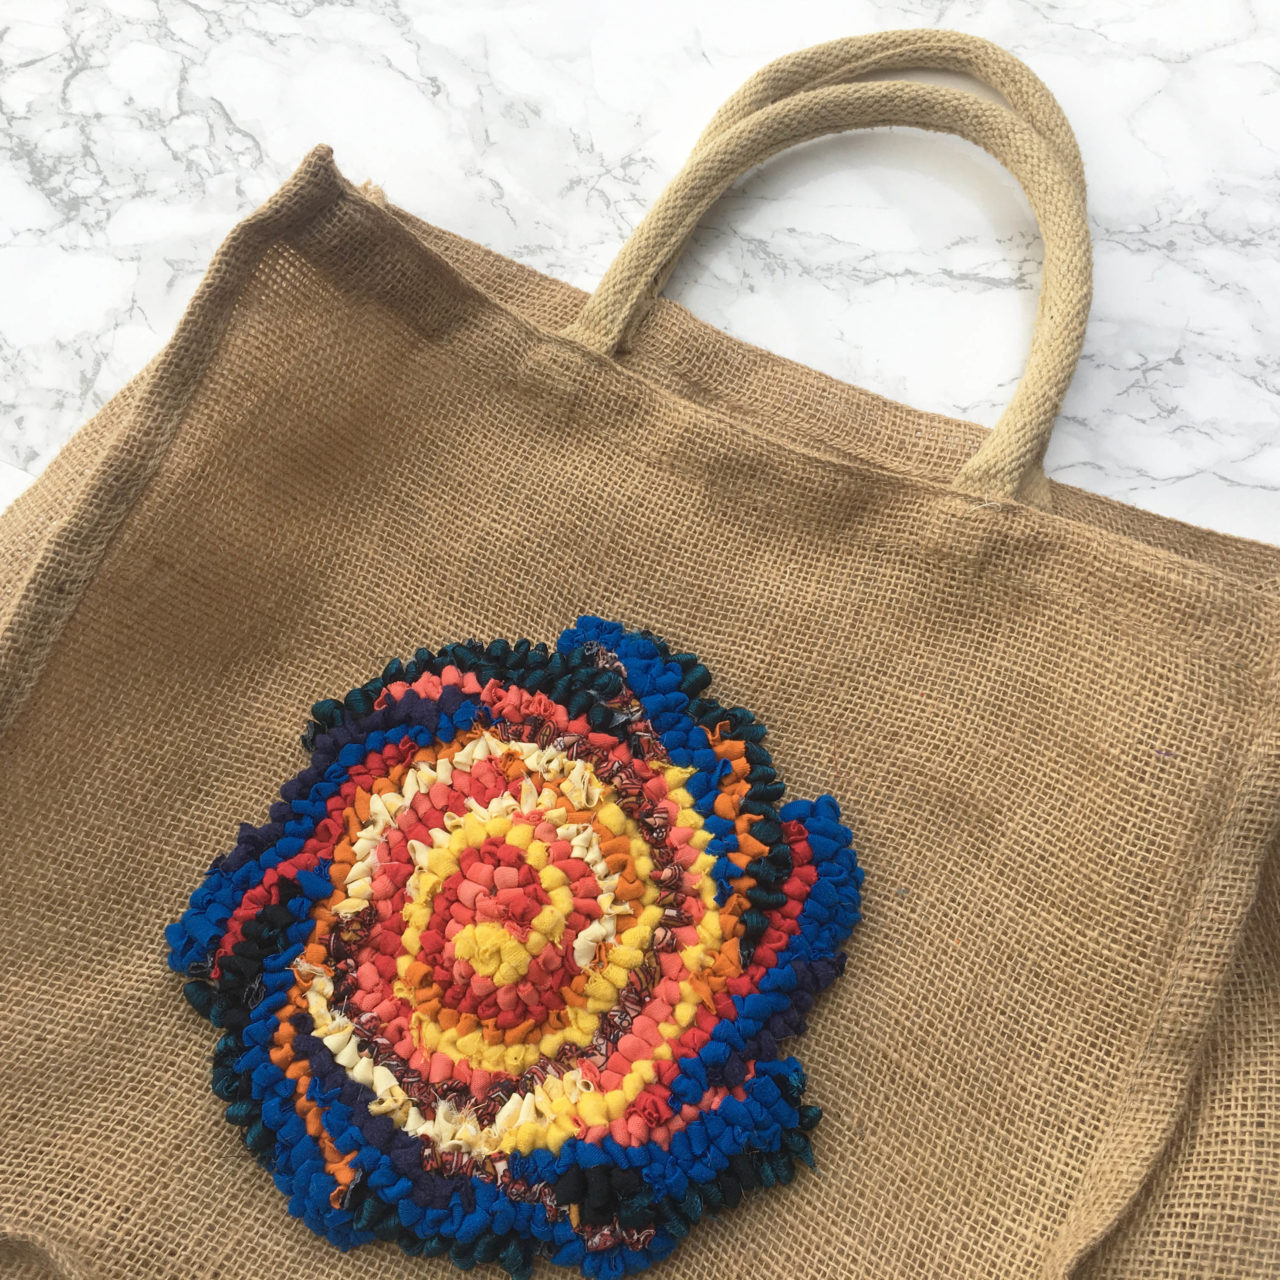 Rag Rug Shopping Bag with Spiral Design